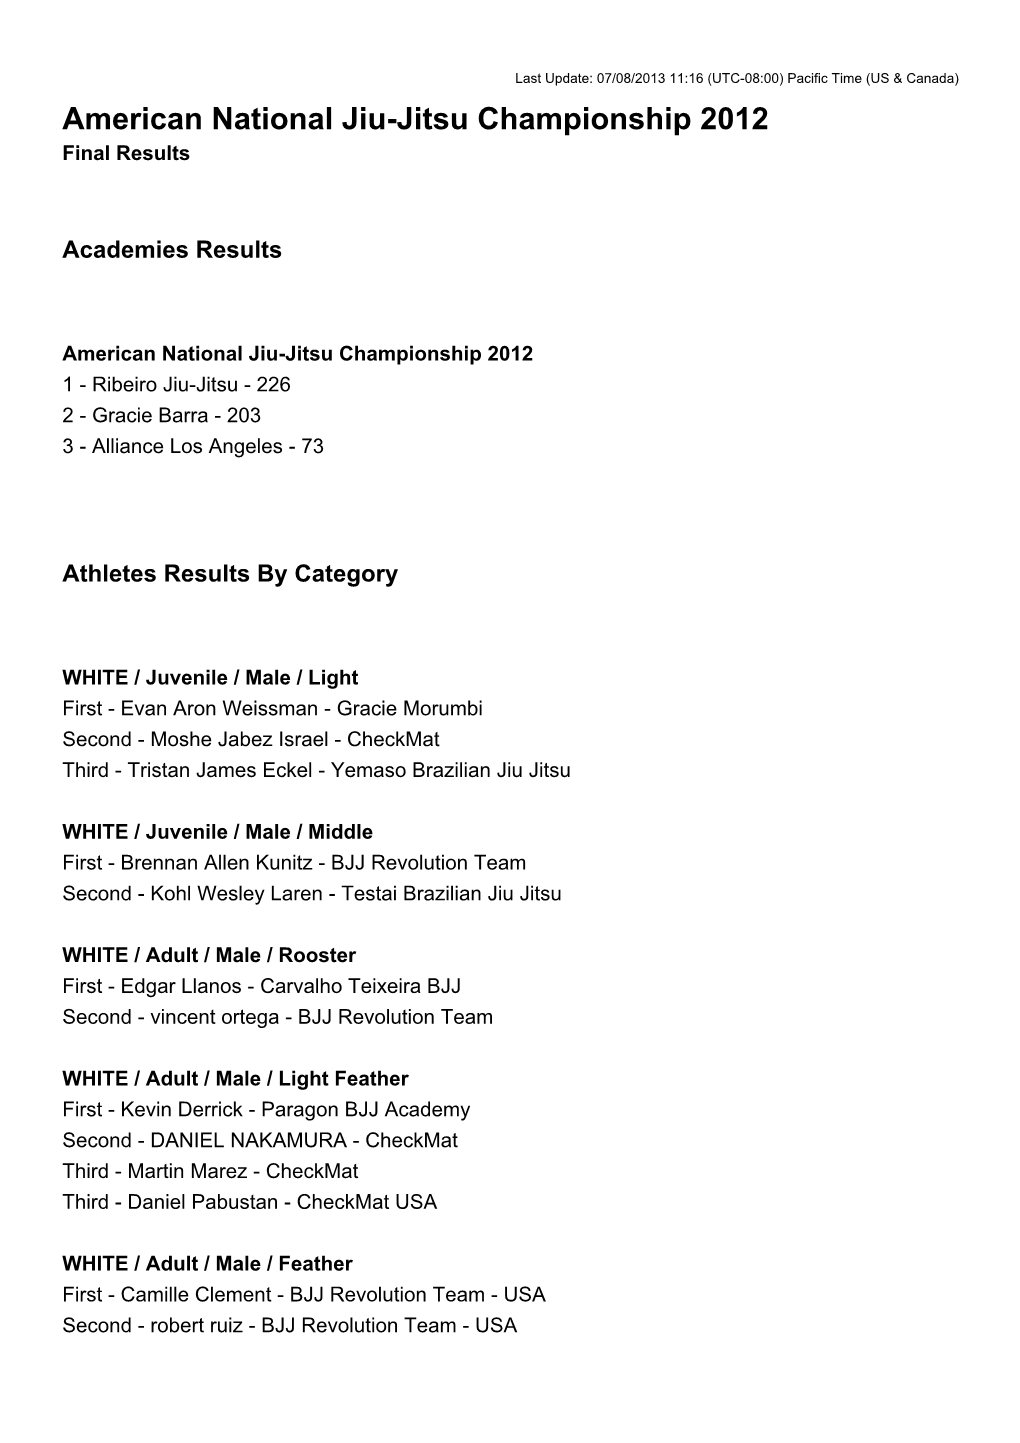 American National Jiu-Jitsu Championship 2012 Final Results